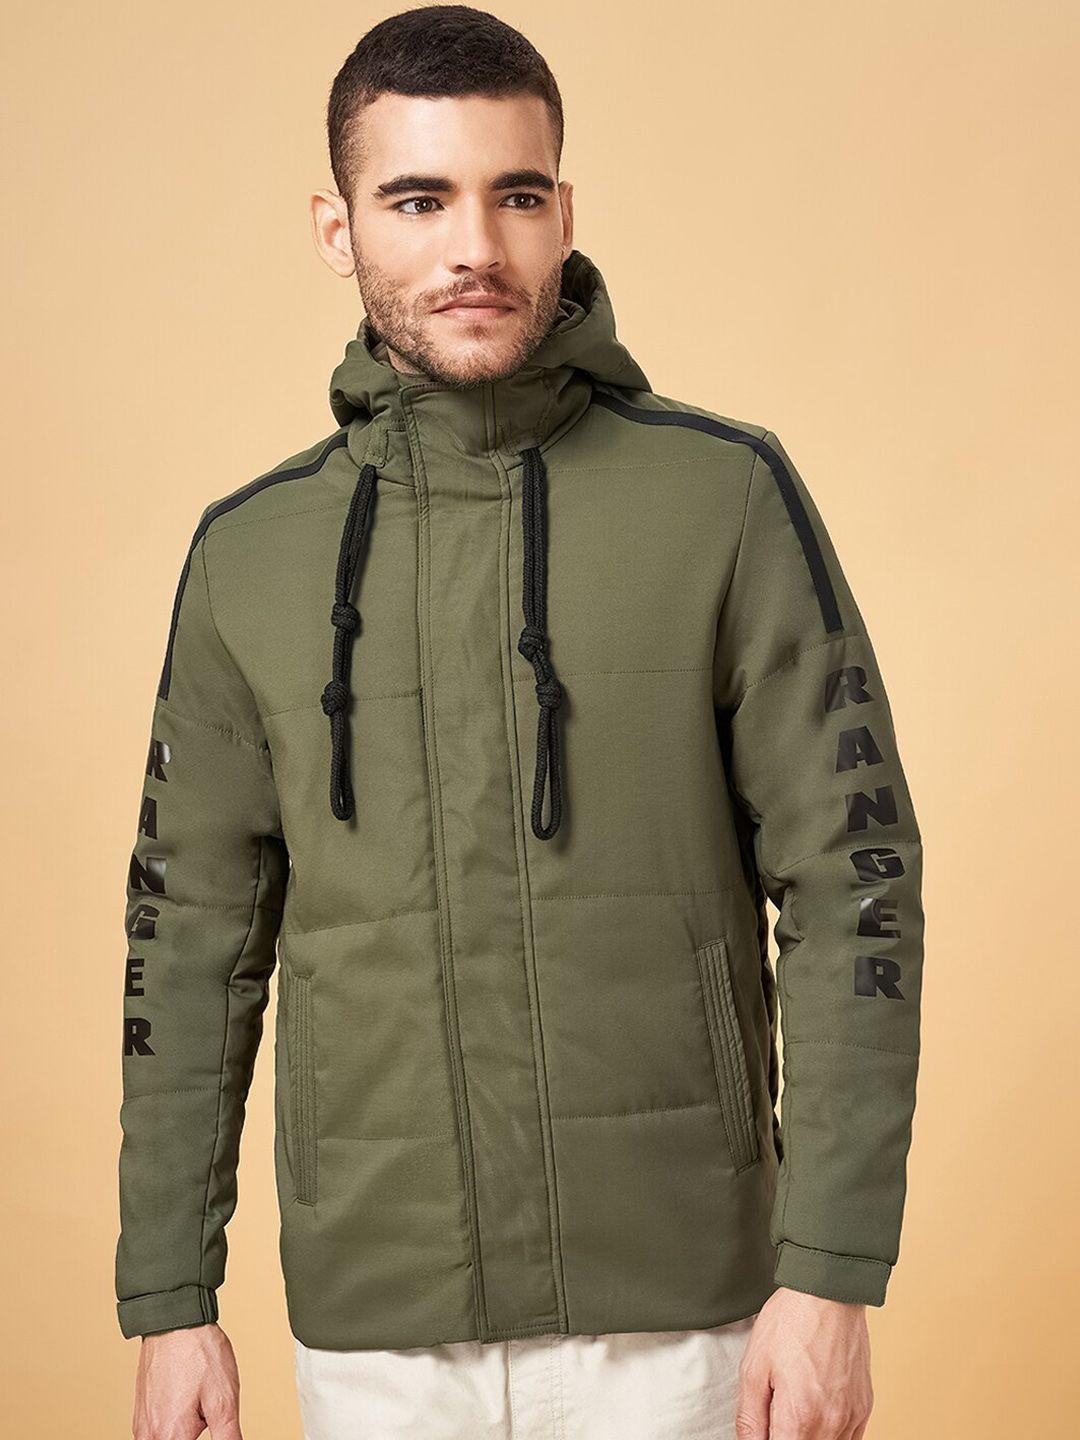 urban-ranger-by-pantaloons-hooded-padded-jacket